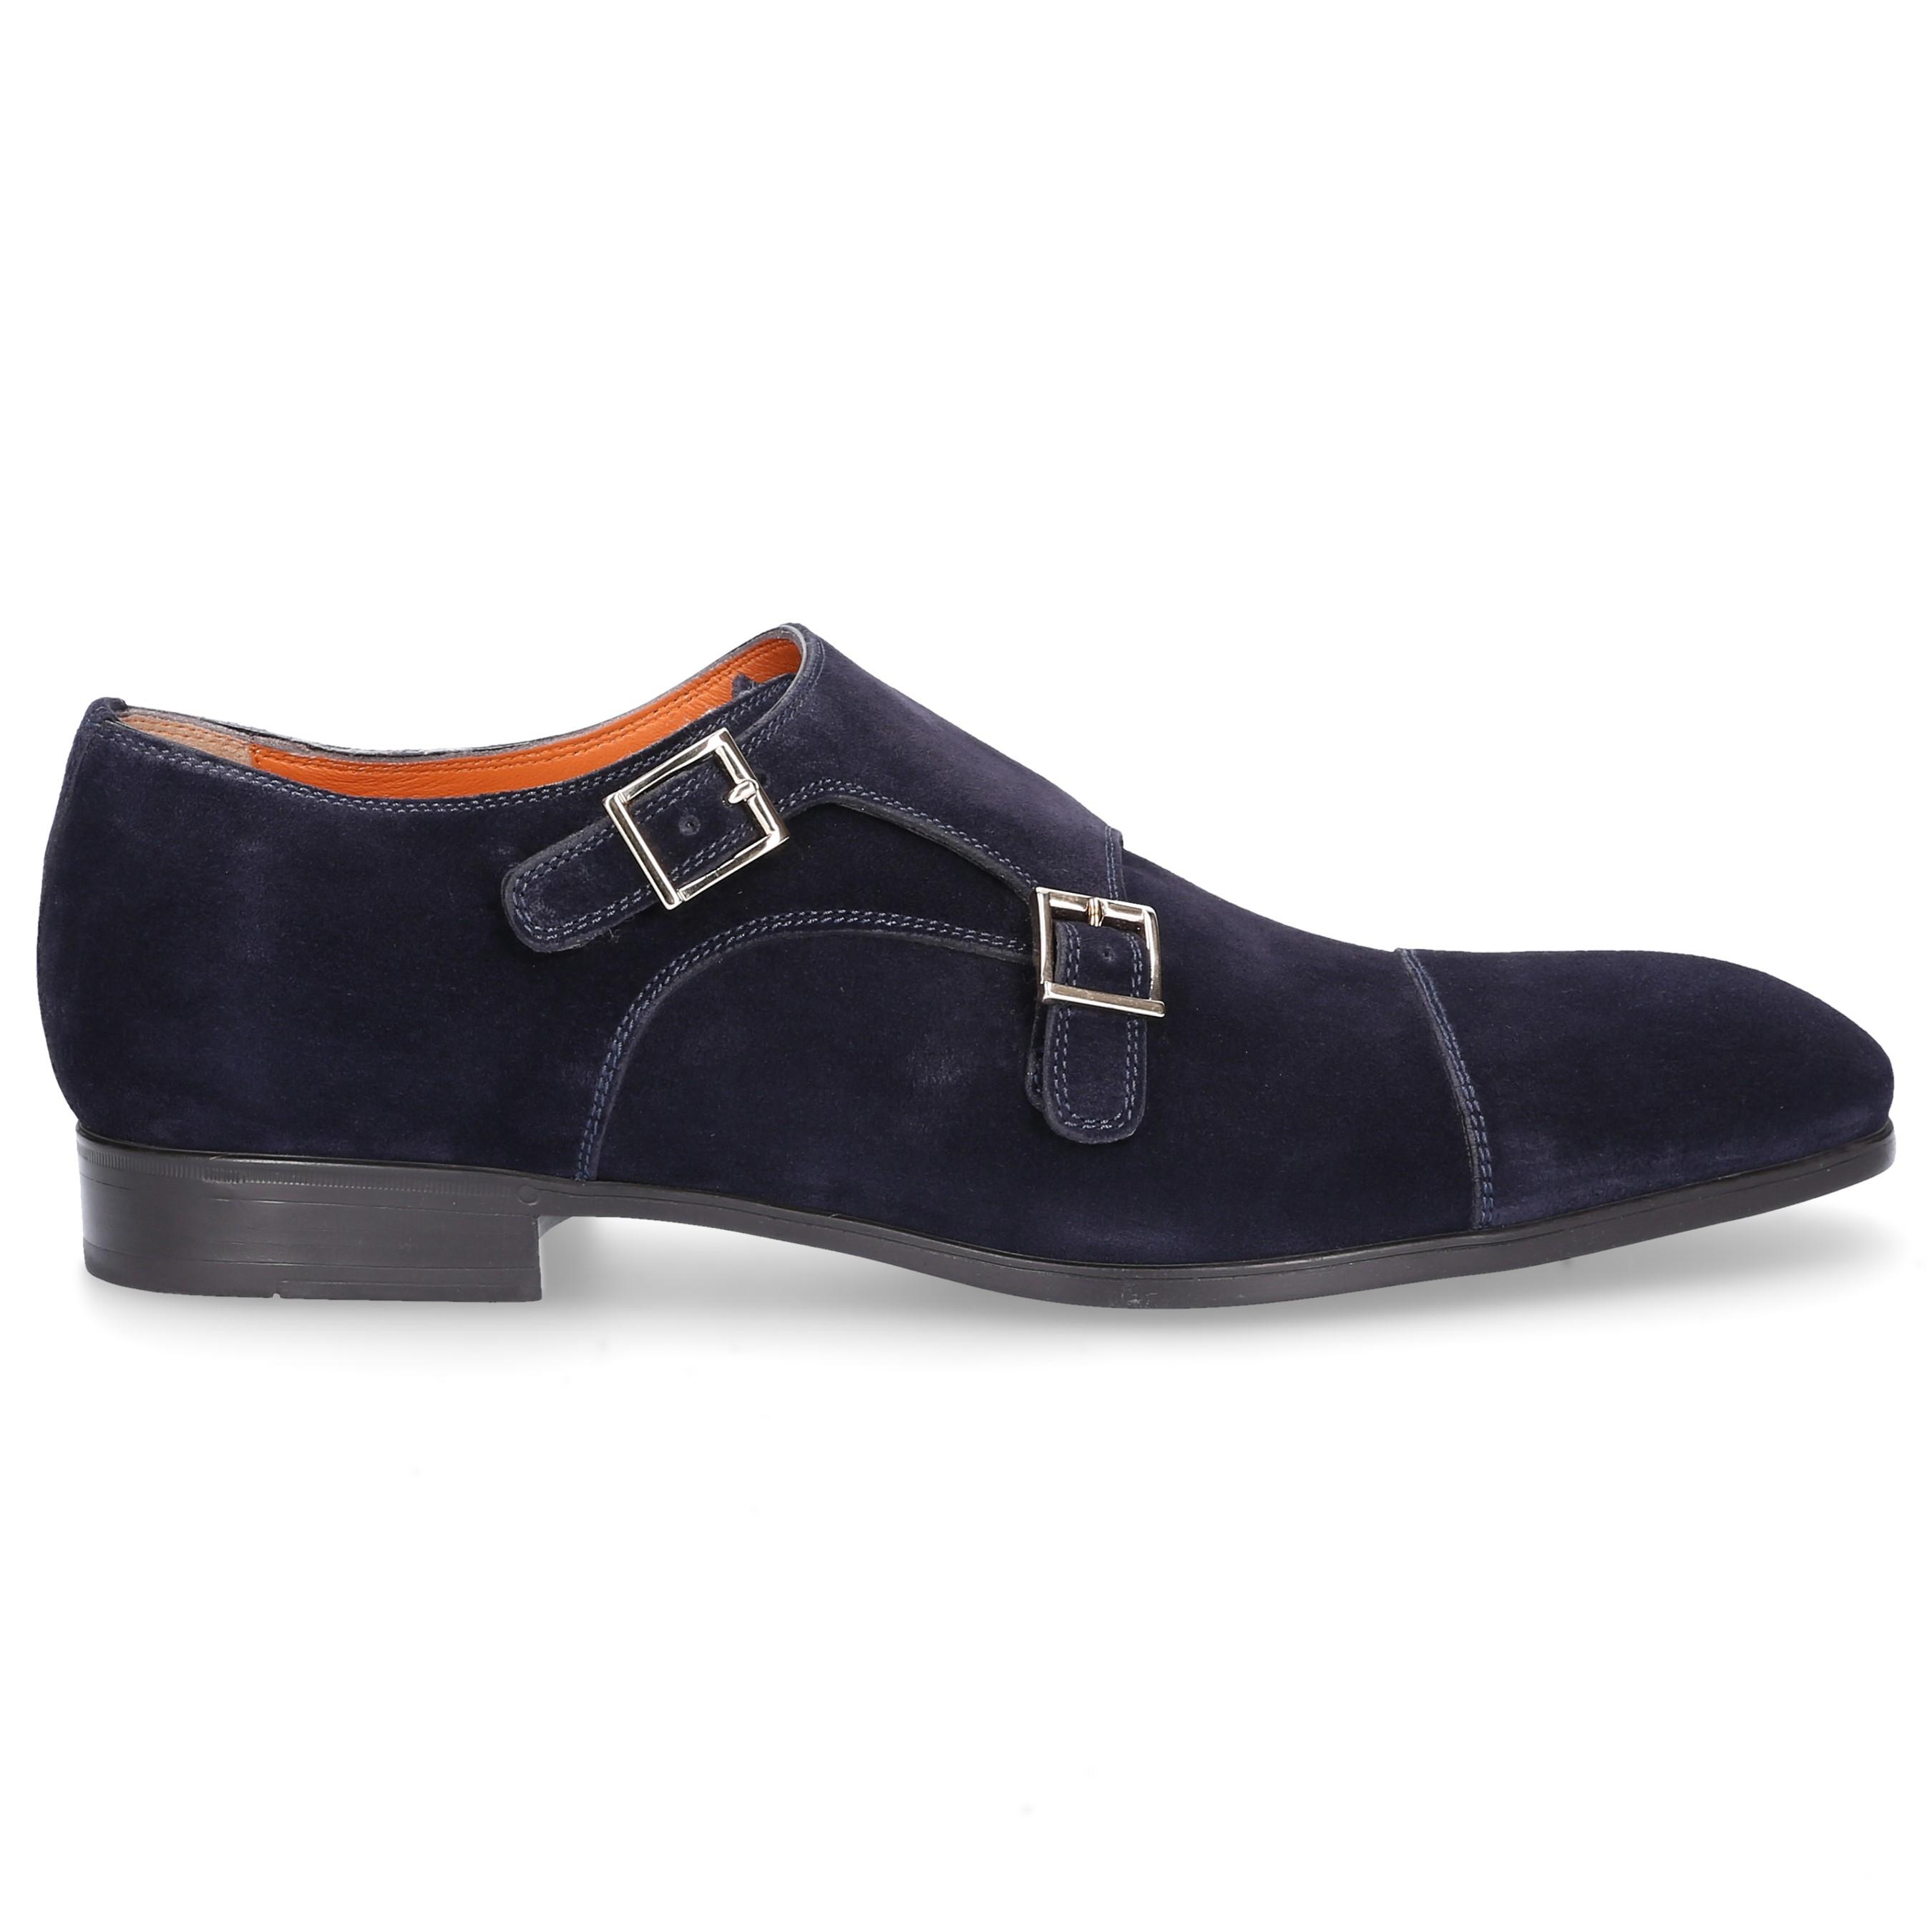 Santoni Suede Monk Shoes 14549 in Blue for Men - Lyst